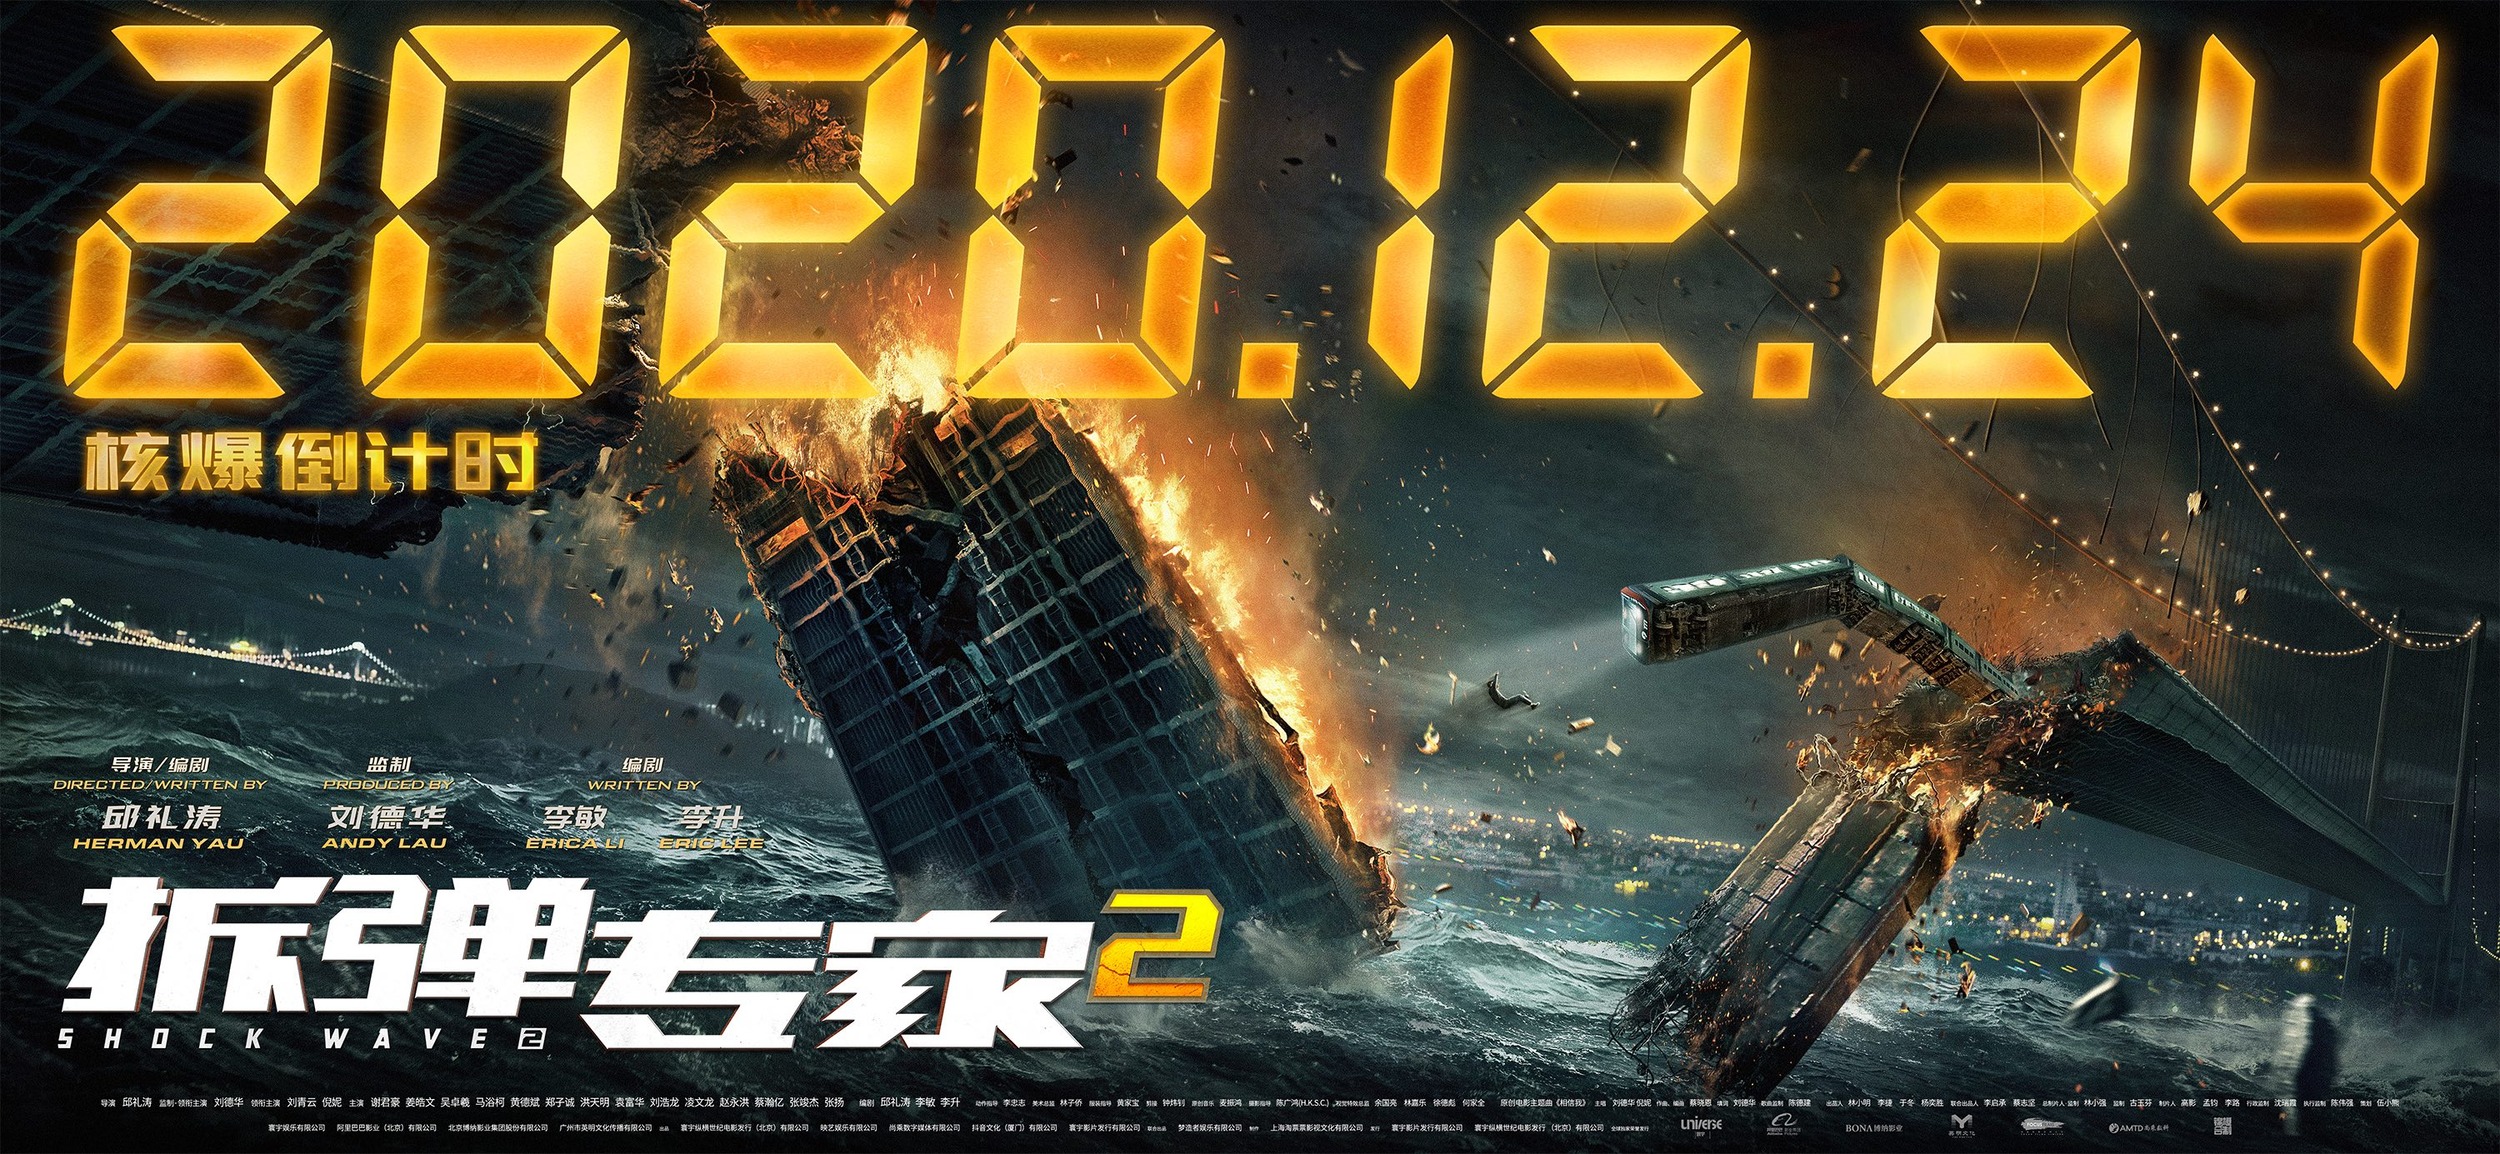 Mega Sized Movie Poster Image for Shock Wave 2 (#5 of 7)